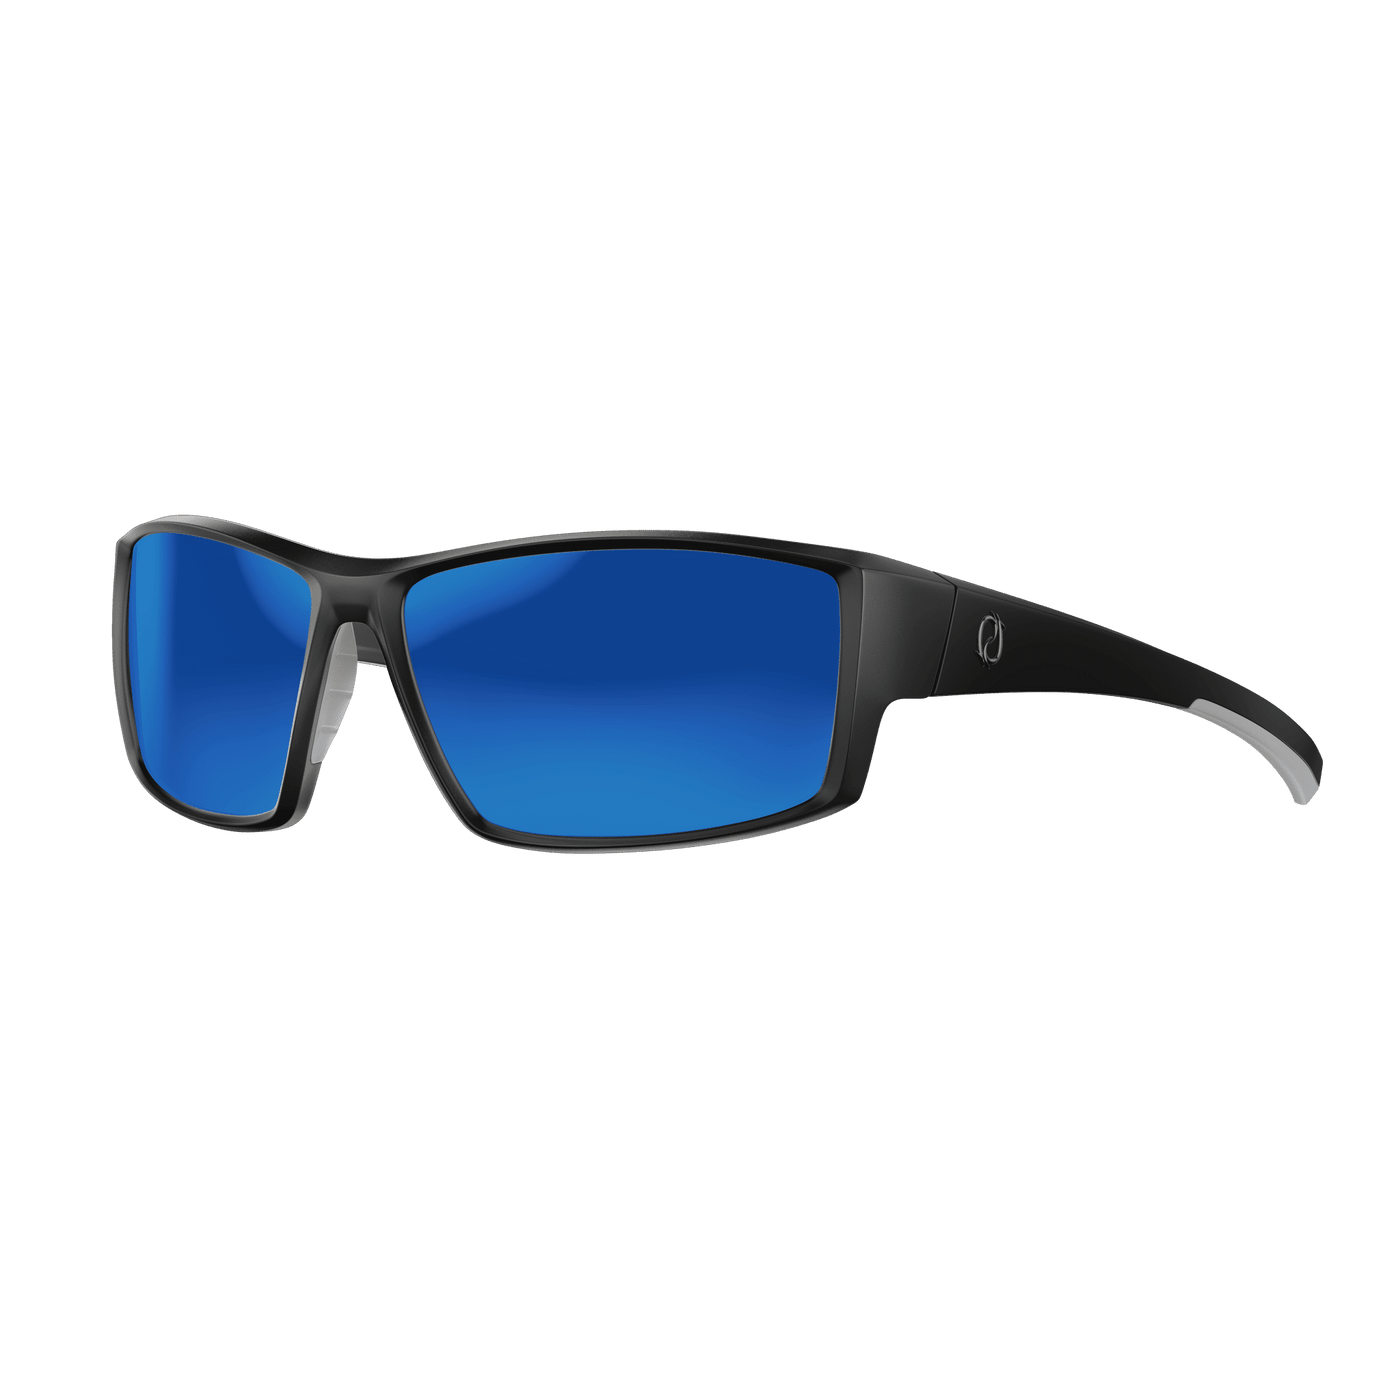 Redtail Republic Sunglasses Accessories Redtail Republic Baffin Matte Black Blue Mirror